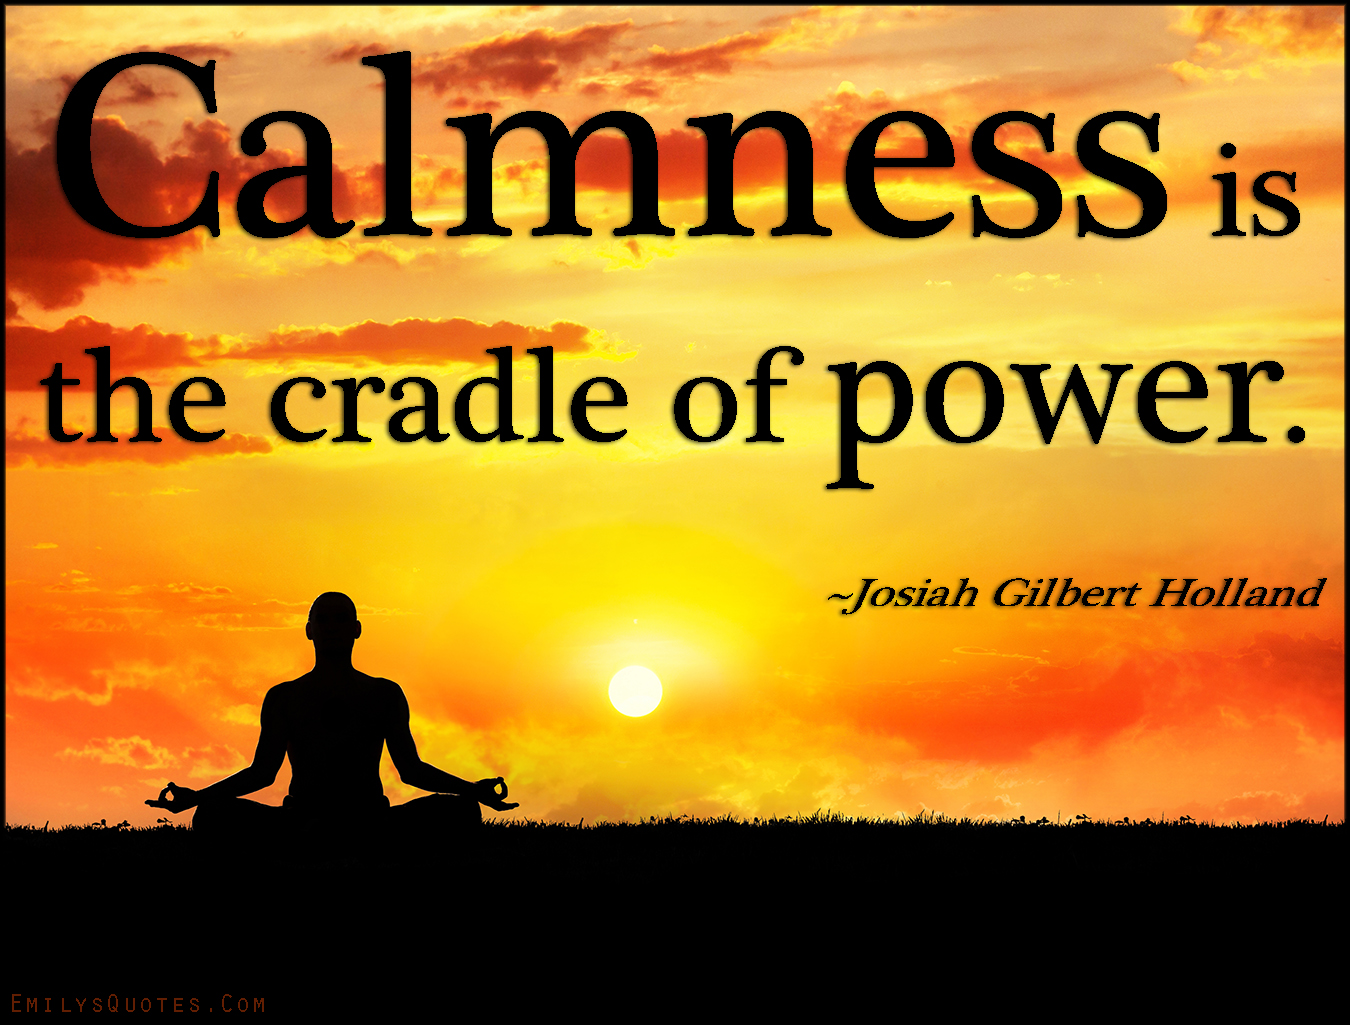 Calmness is the cradle of power